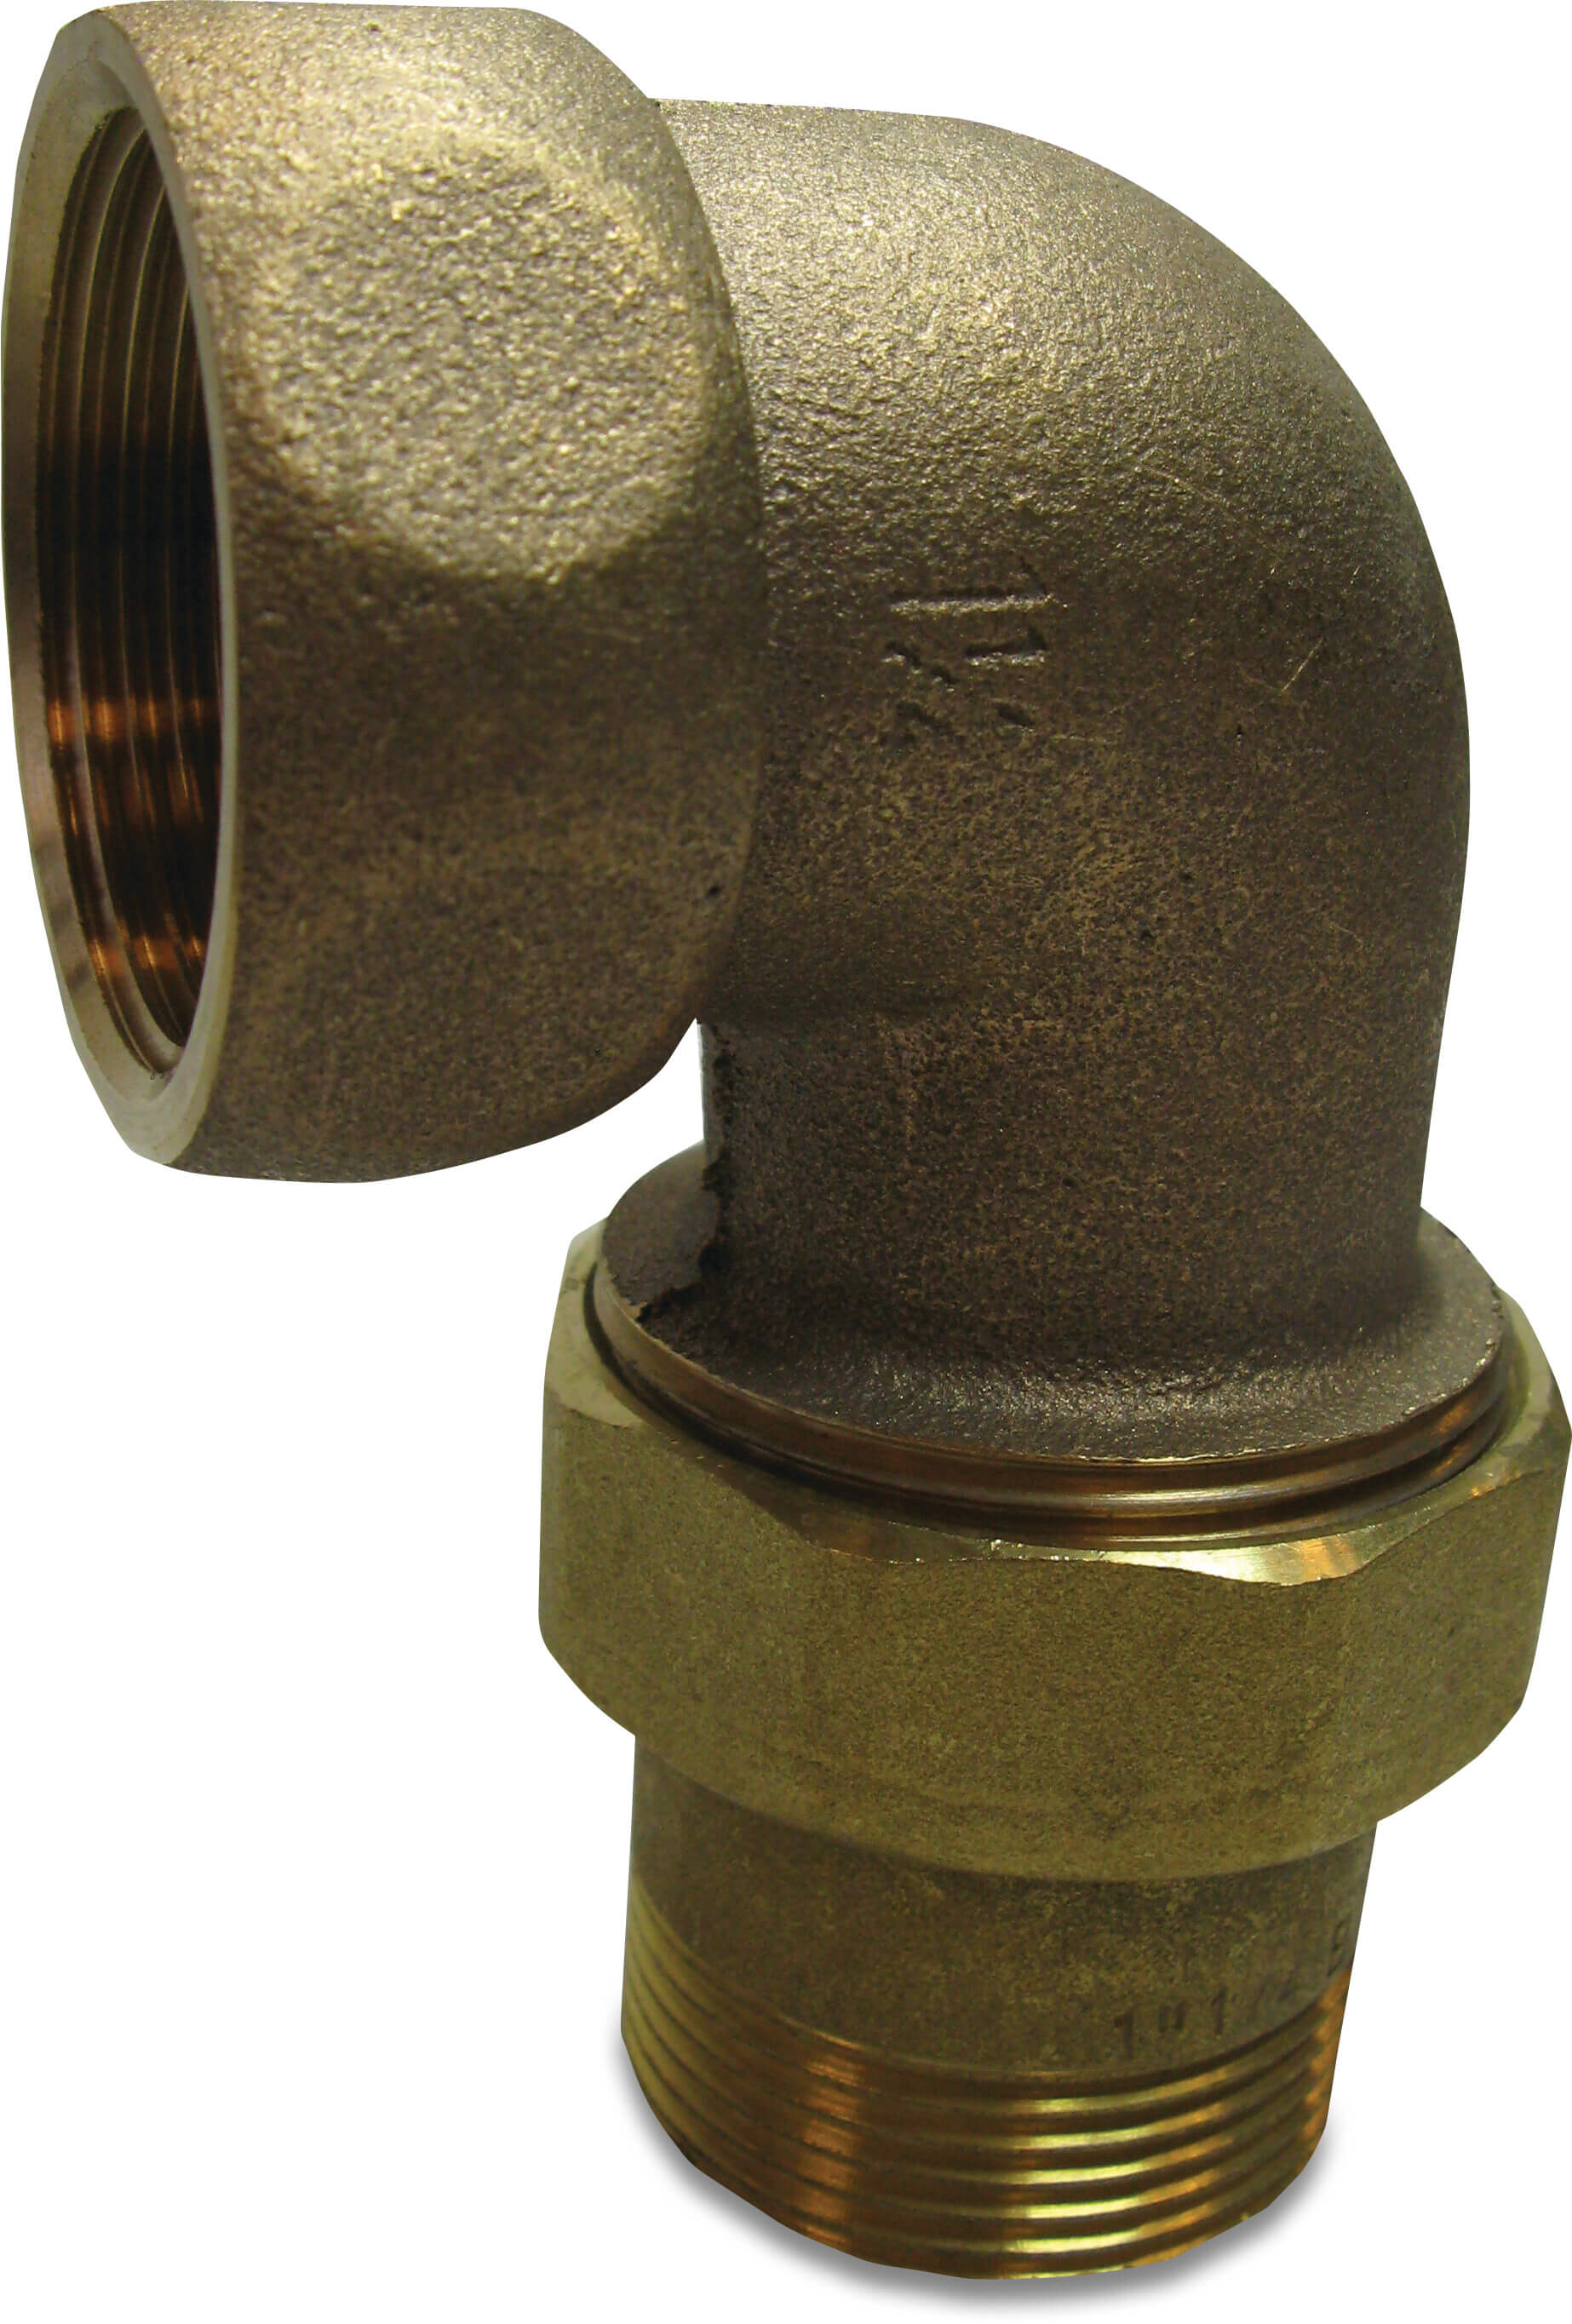 Nr. 98 Elbow coupler 90° bronze 1 1/4" female thread x male thread 25bar type conical